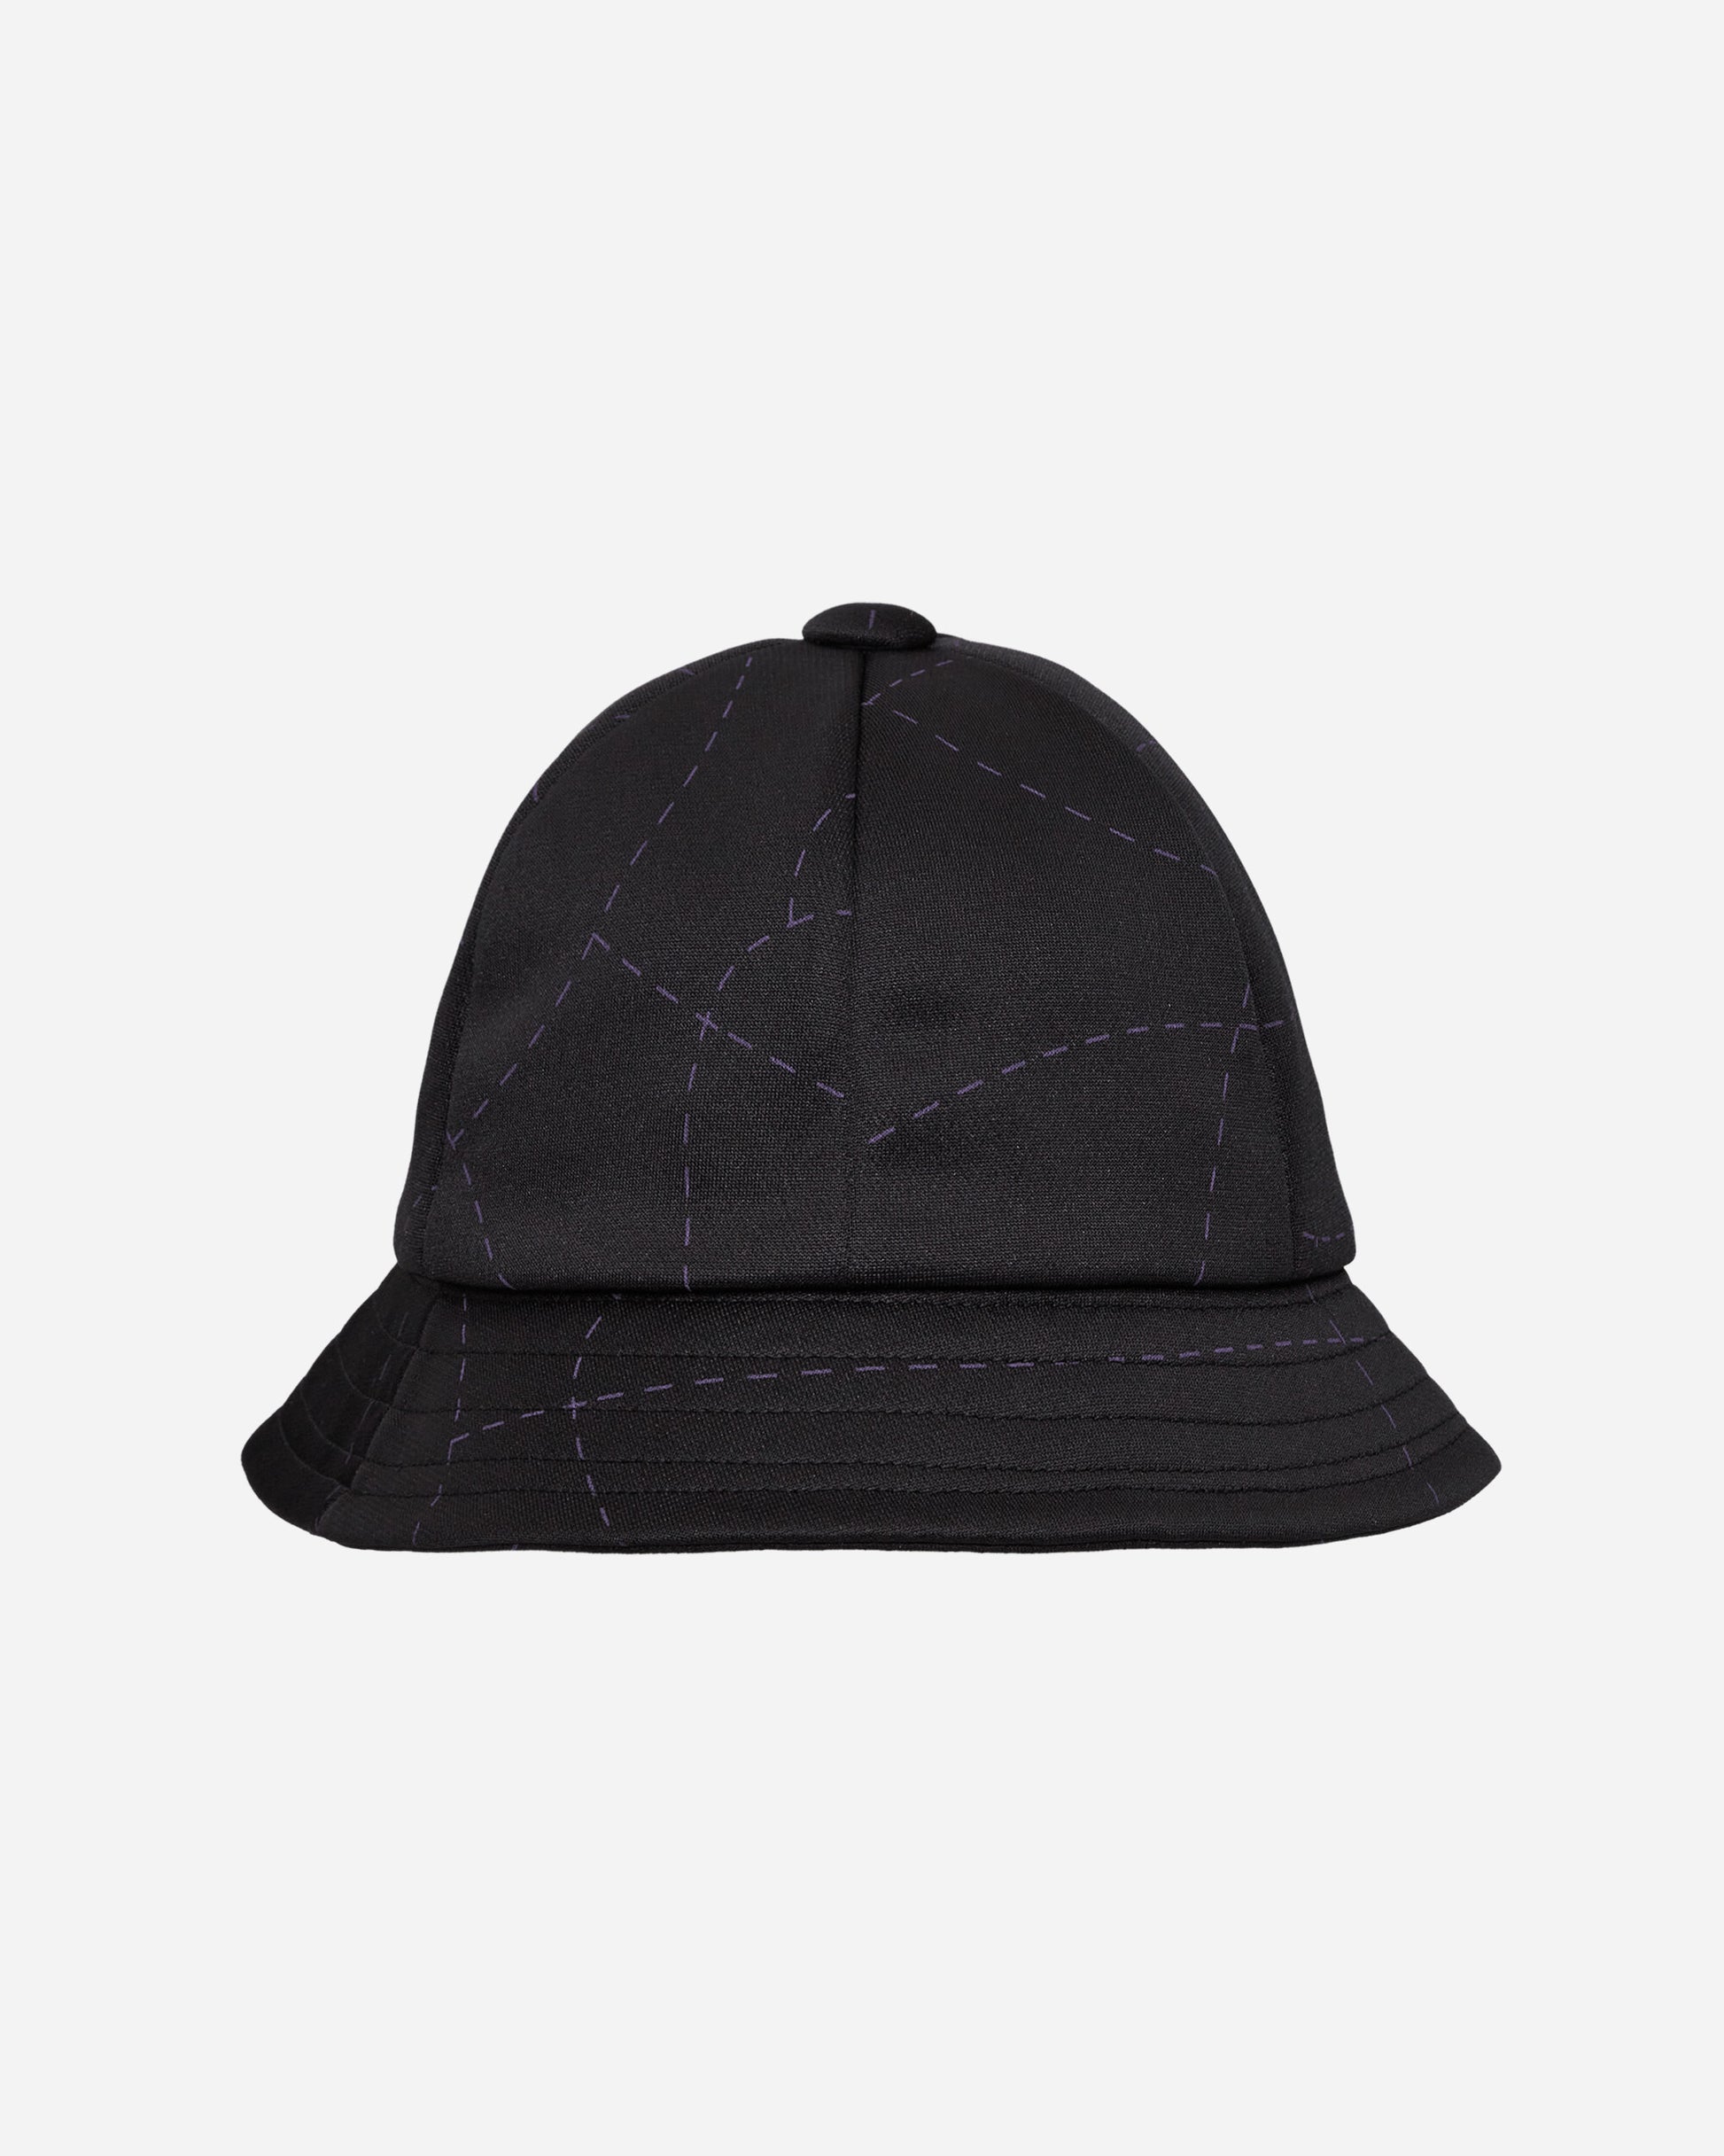 Needles Bermuda Hat Black Hats Bucket MR610 B